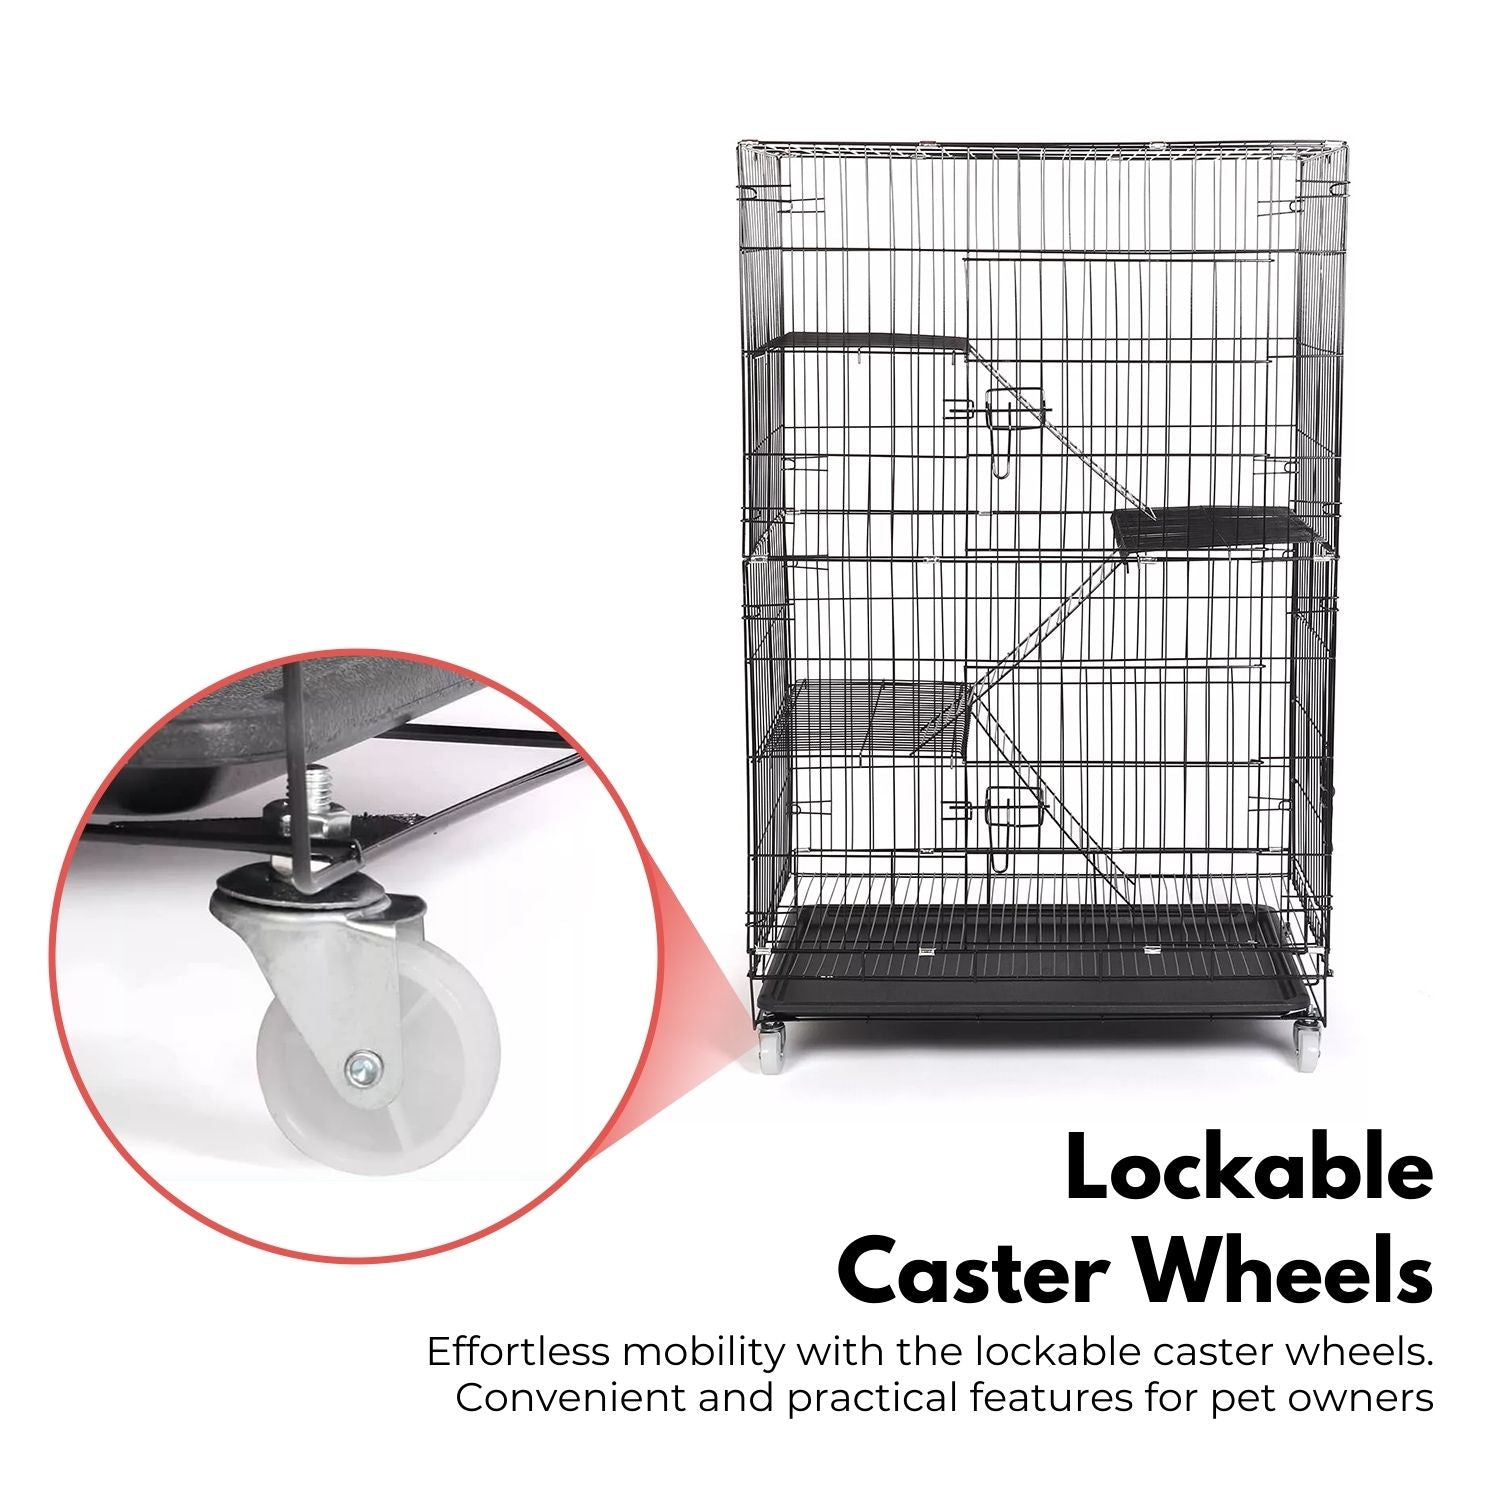 FLOOFI Four-Level Pet Rabbit Bird Cage with Hammock (Black)